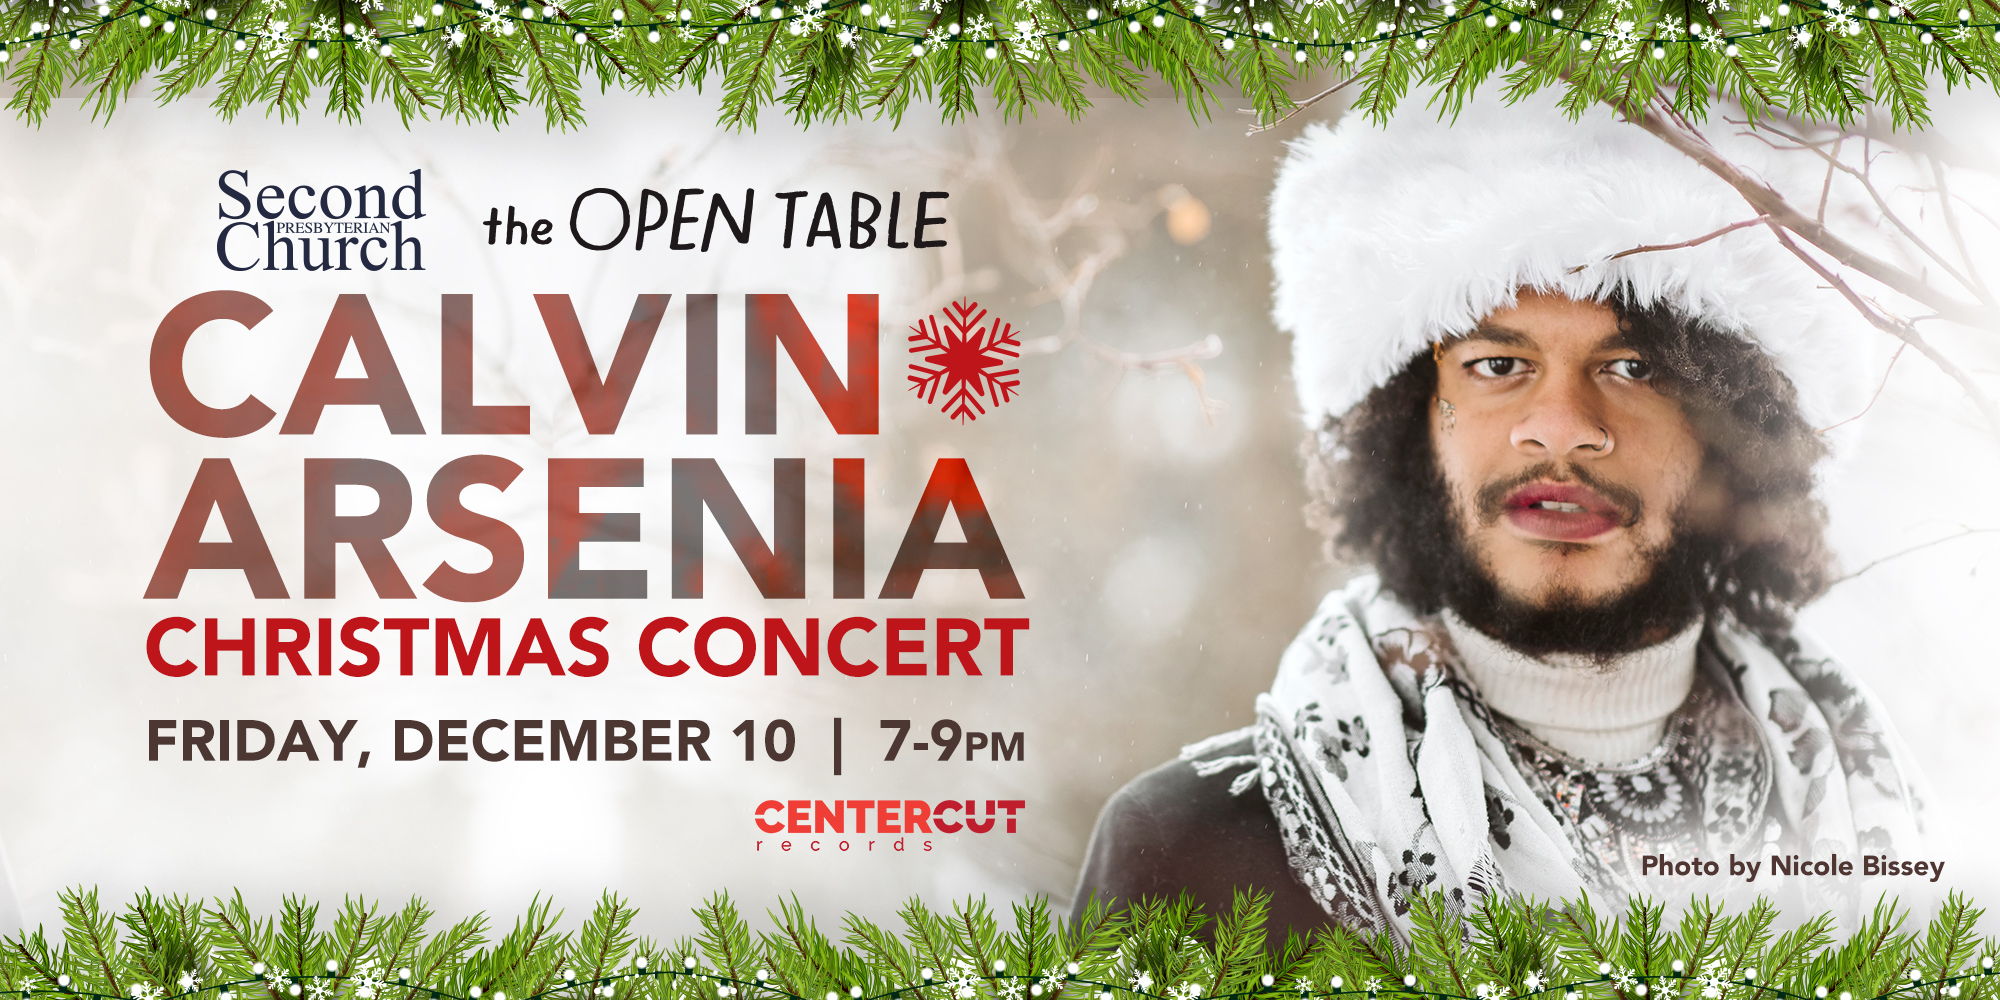 Calvin Arsenia Christmas Concert promotional image